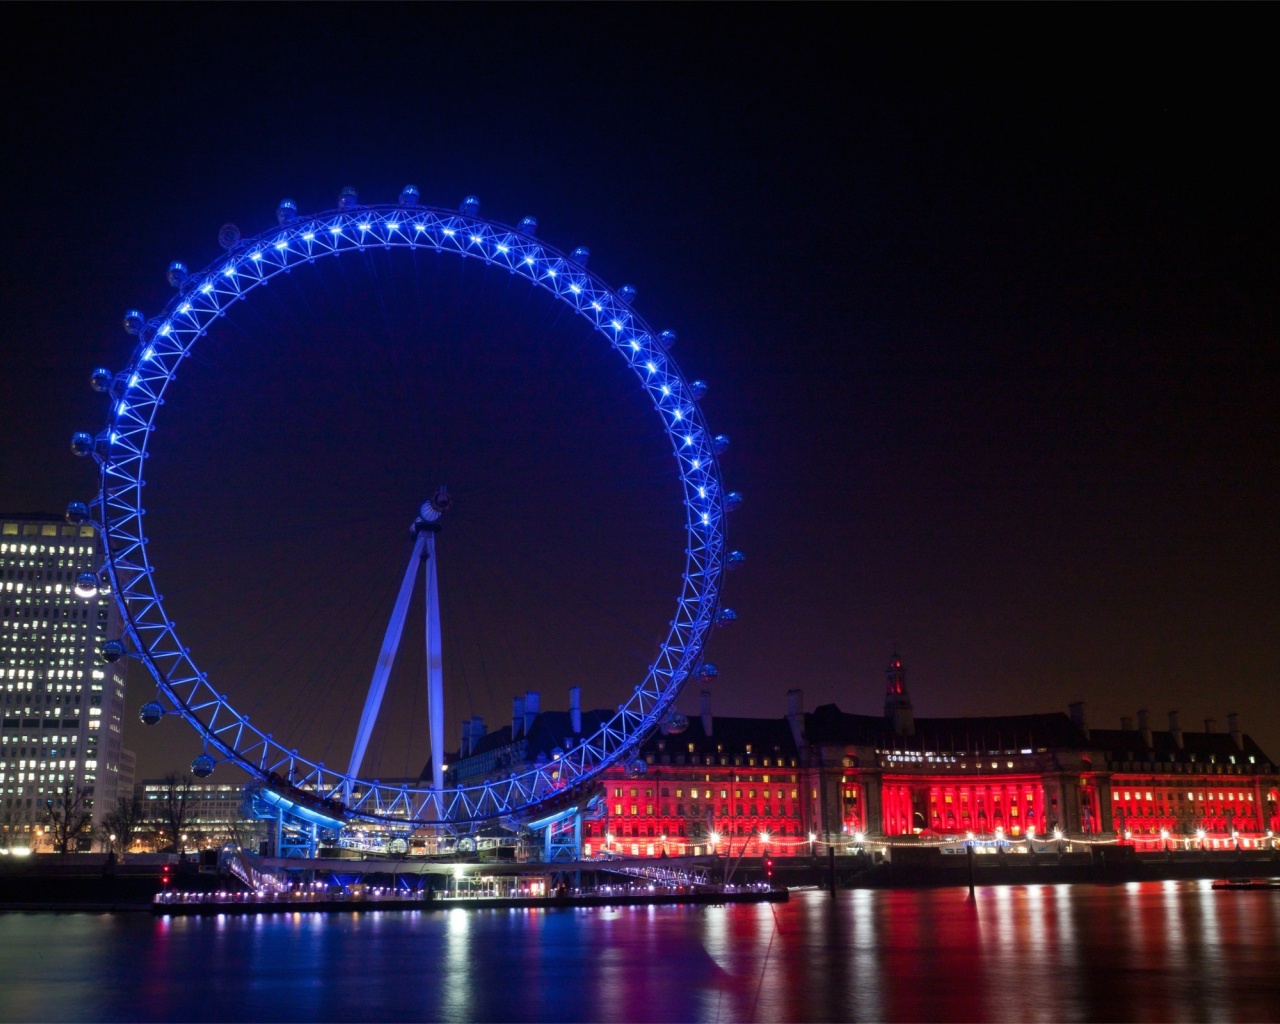 Evening City Lights Lights Illumination Ferris Wheel Buildings Houses Quay River Reflection